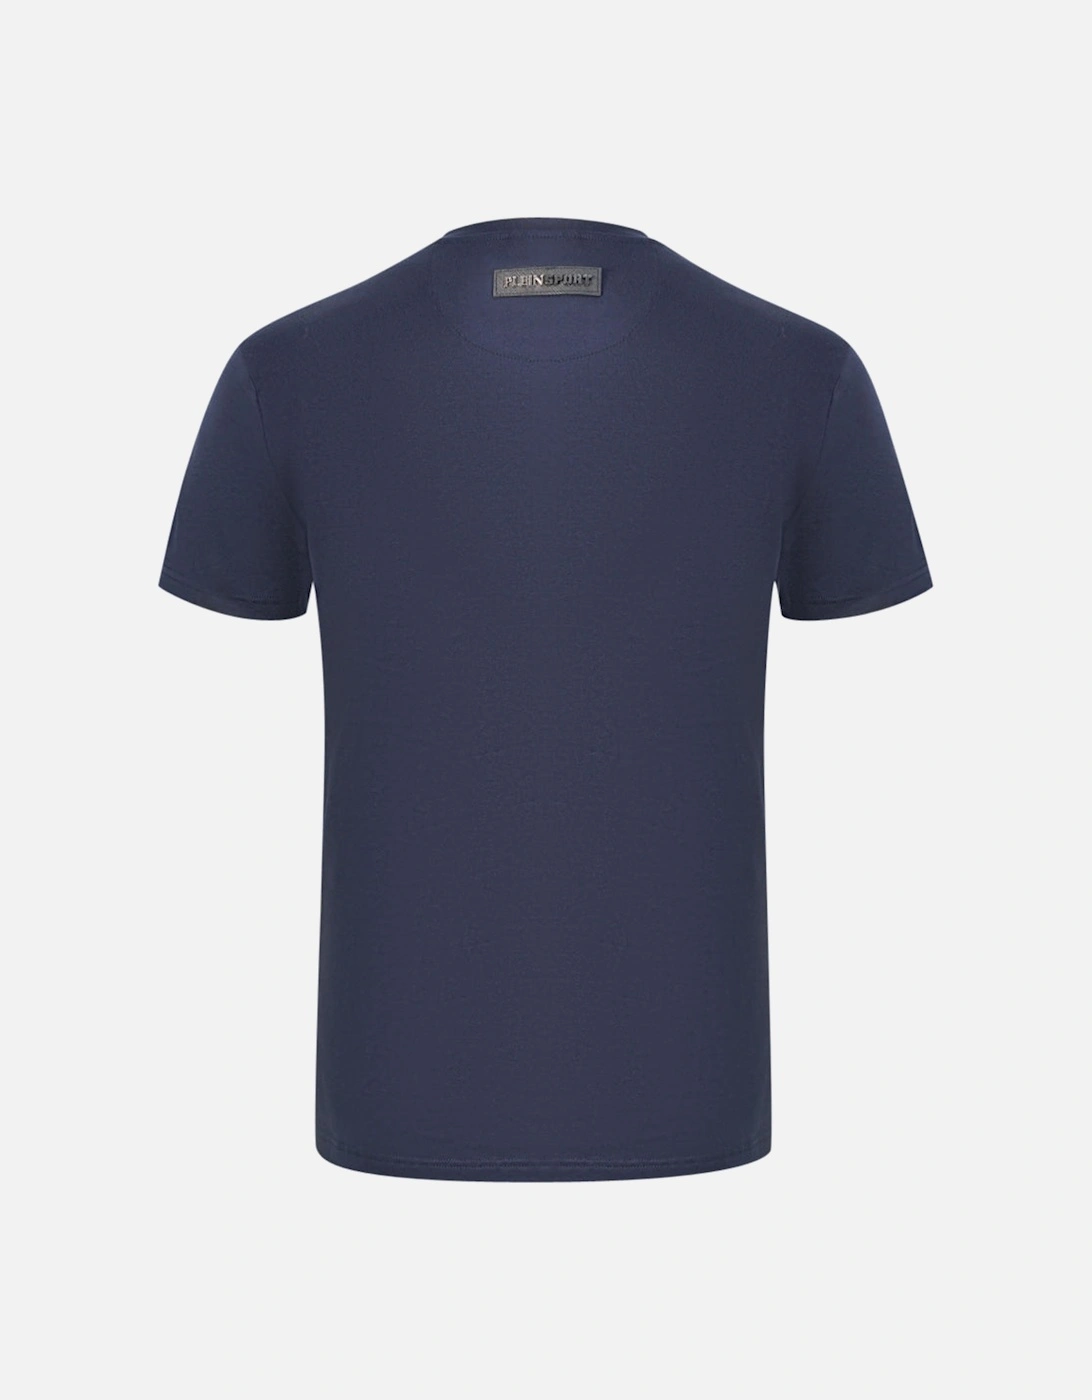 Plein Sport PS78 Design Logo Navy Blue T-Shirt